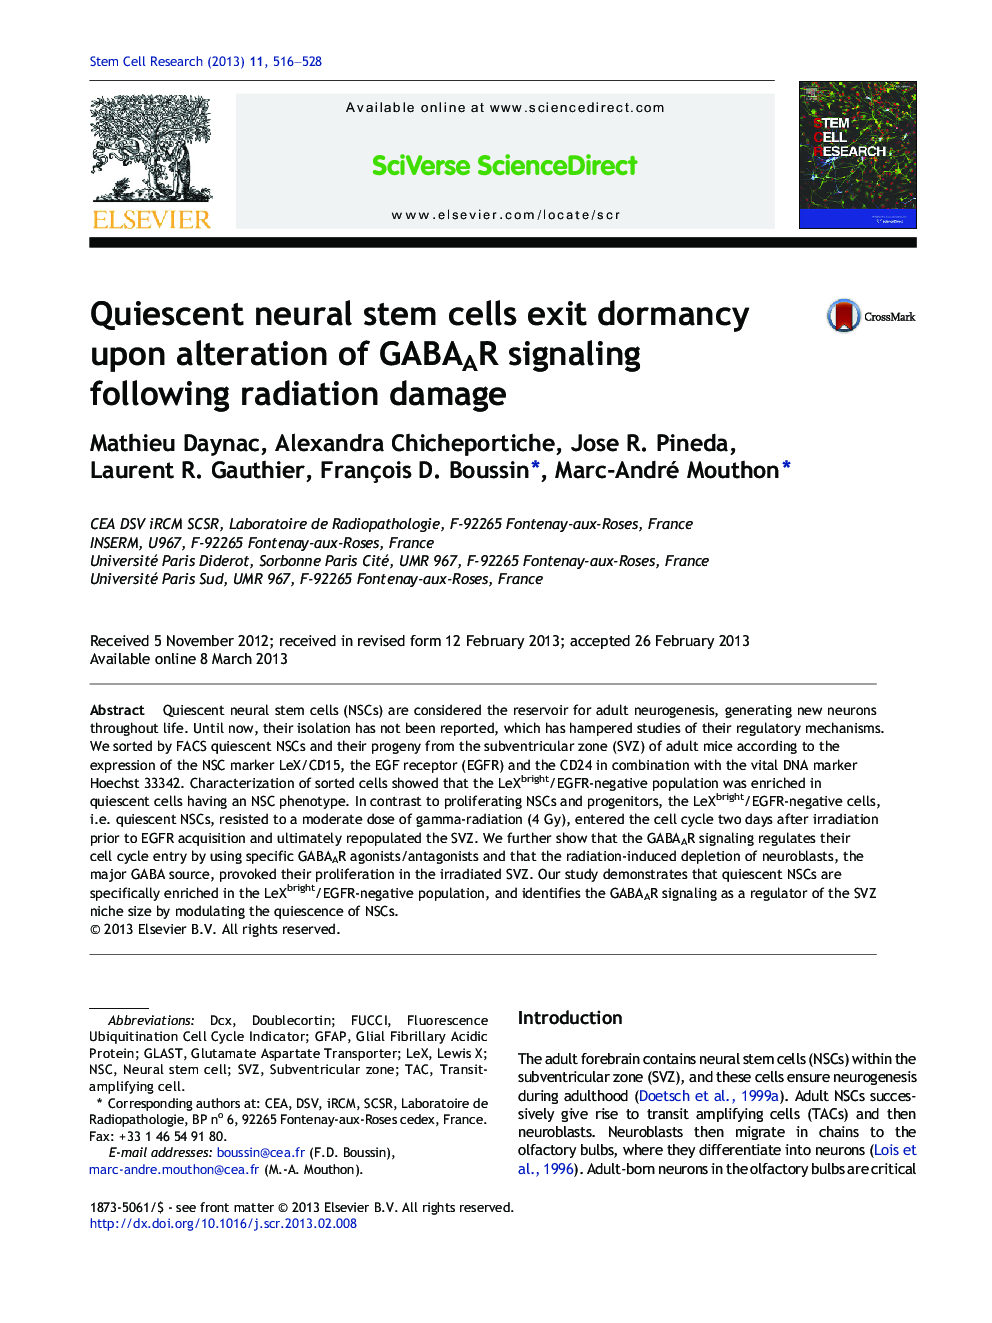 Quiescent neural stem cells exit dormancy upon alteration of GABAAR signaling following radiation damage